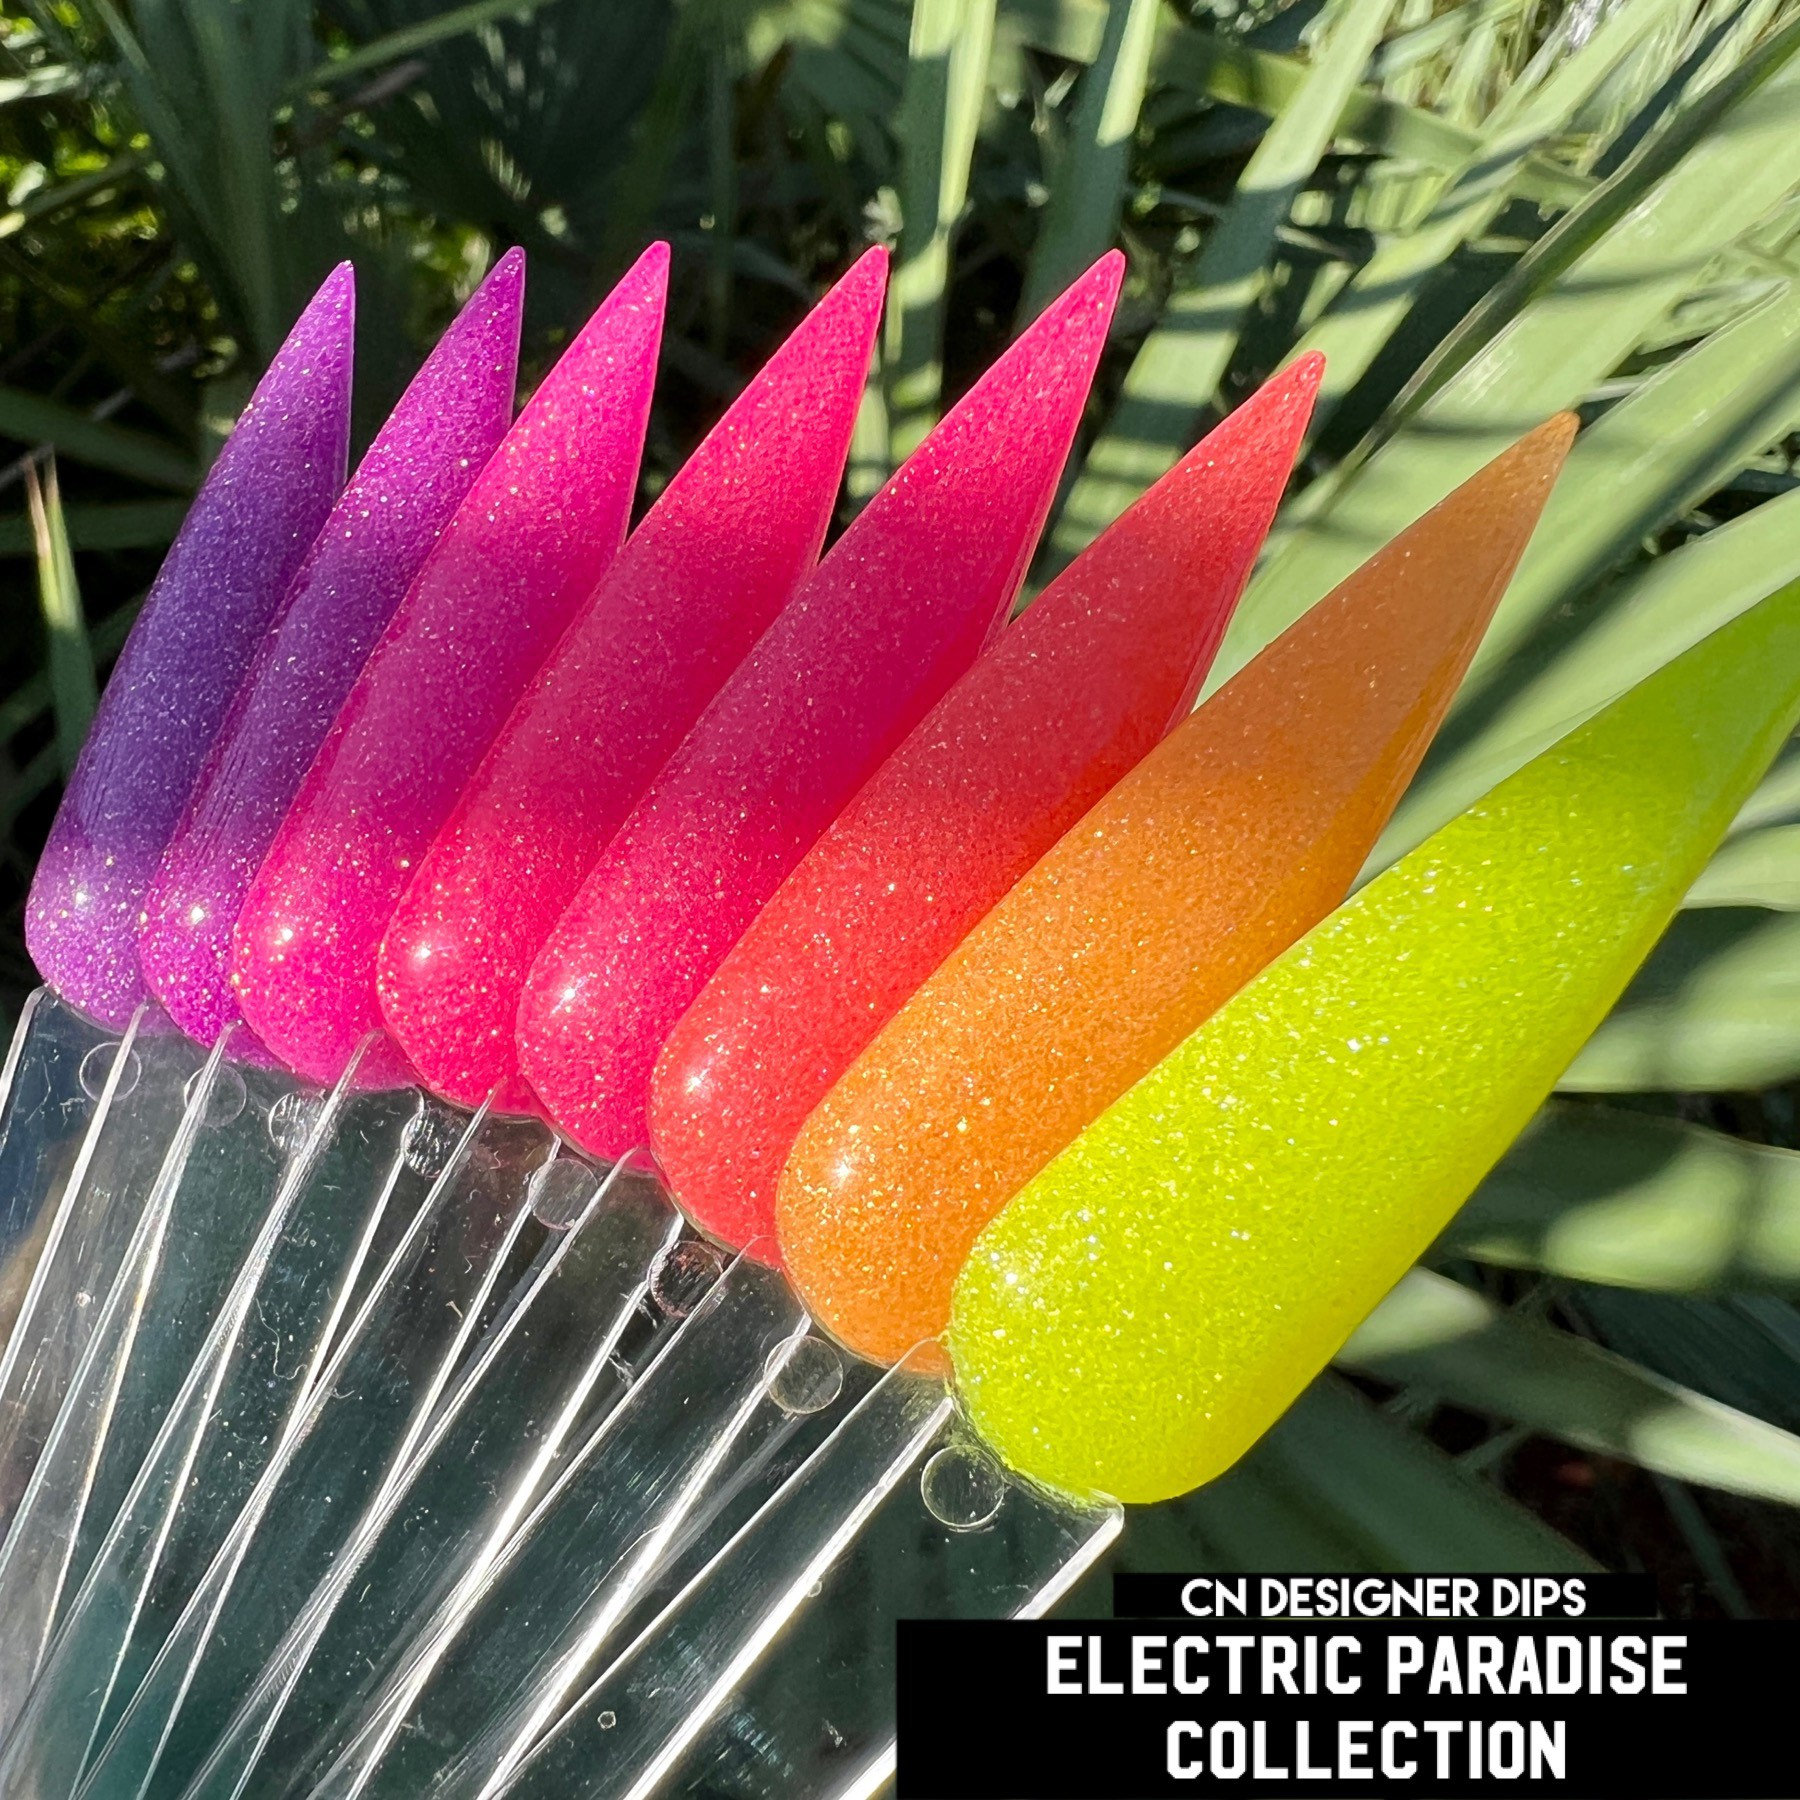 Electric Paradise Collection - Dip-Pulver, Dip-Pulver Für Nägel, Nagel-Dip, Dip-Nagel, Dip-Nagelpulver, Neon-Dip-Pulver, Dip-Nagel von Etsy - CNDesignerDips